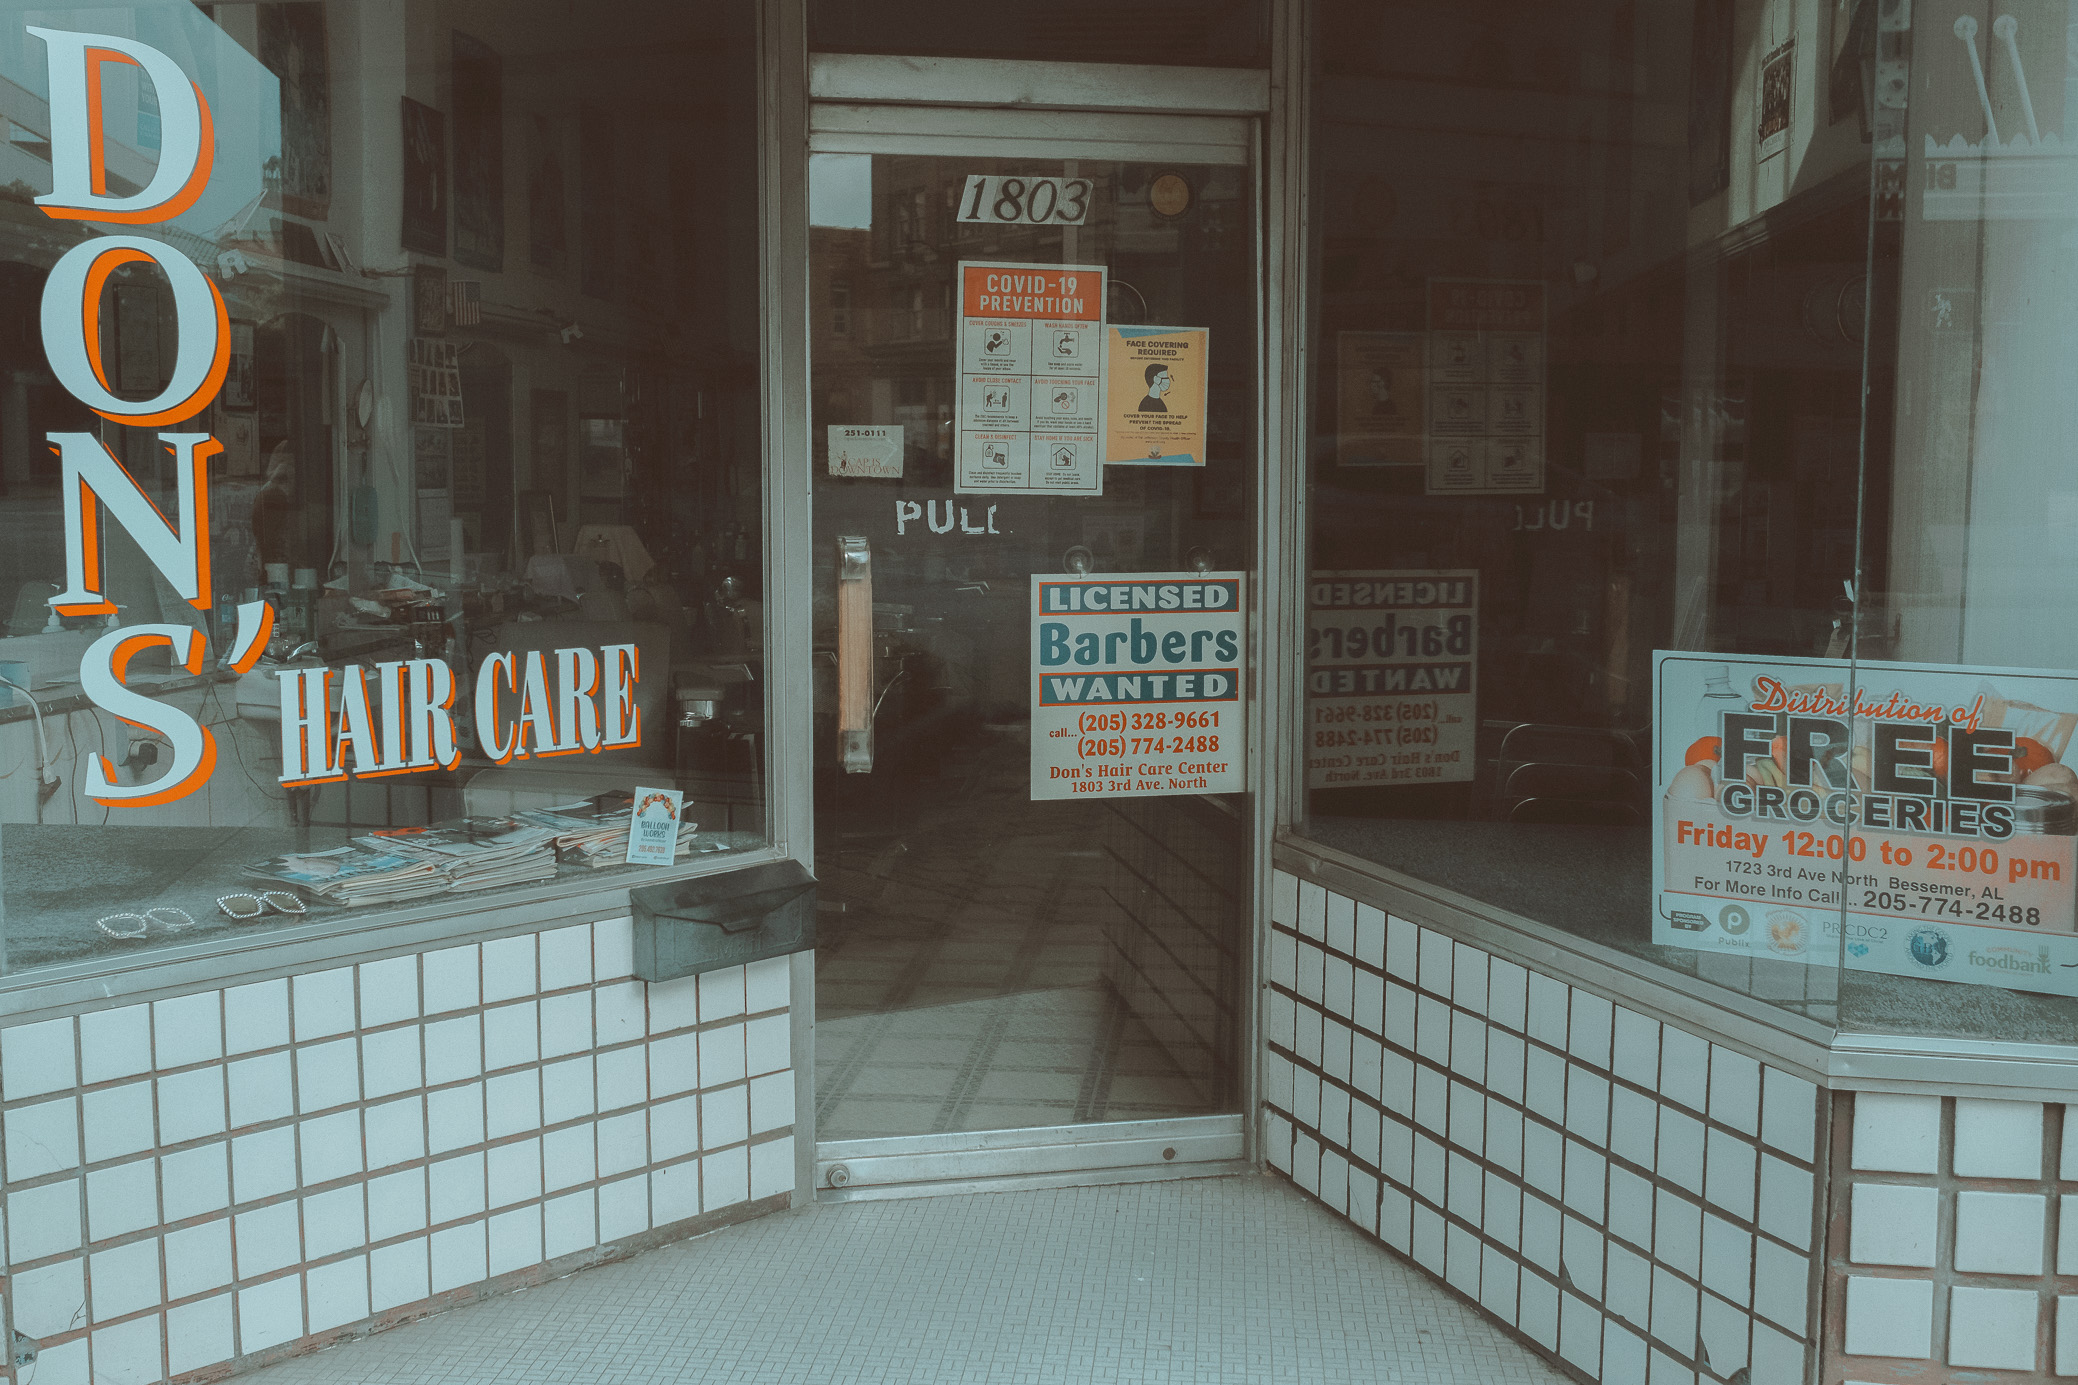 Don's Hair Care | Birmingham, Alabama | July 16th, 2021